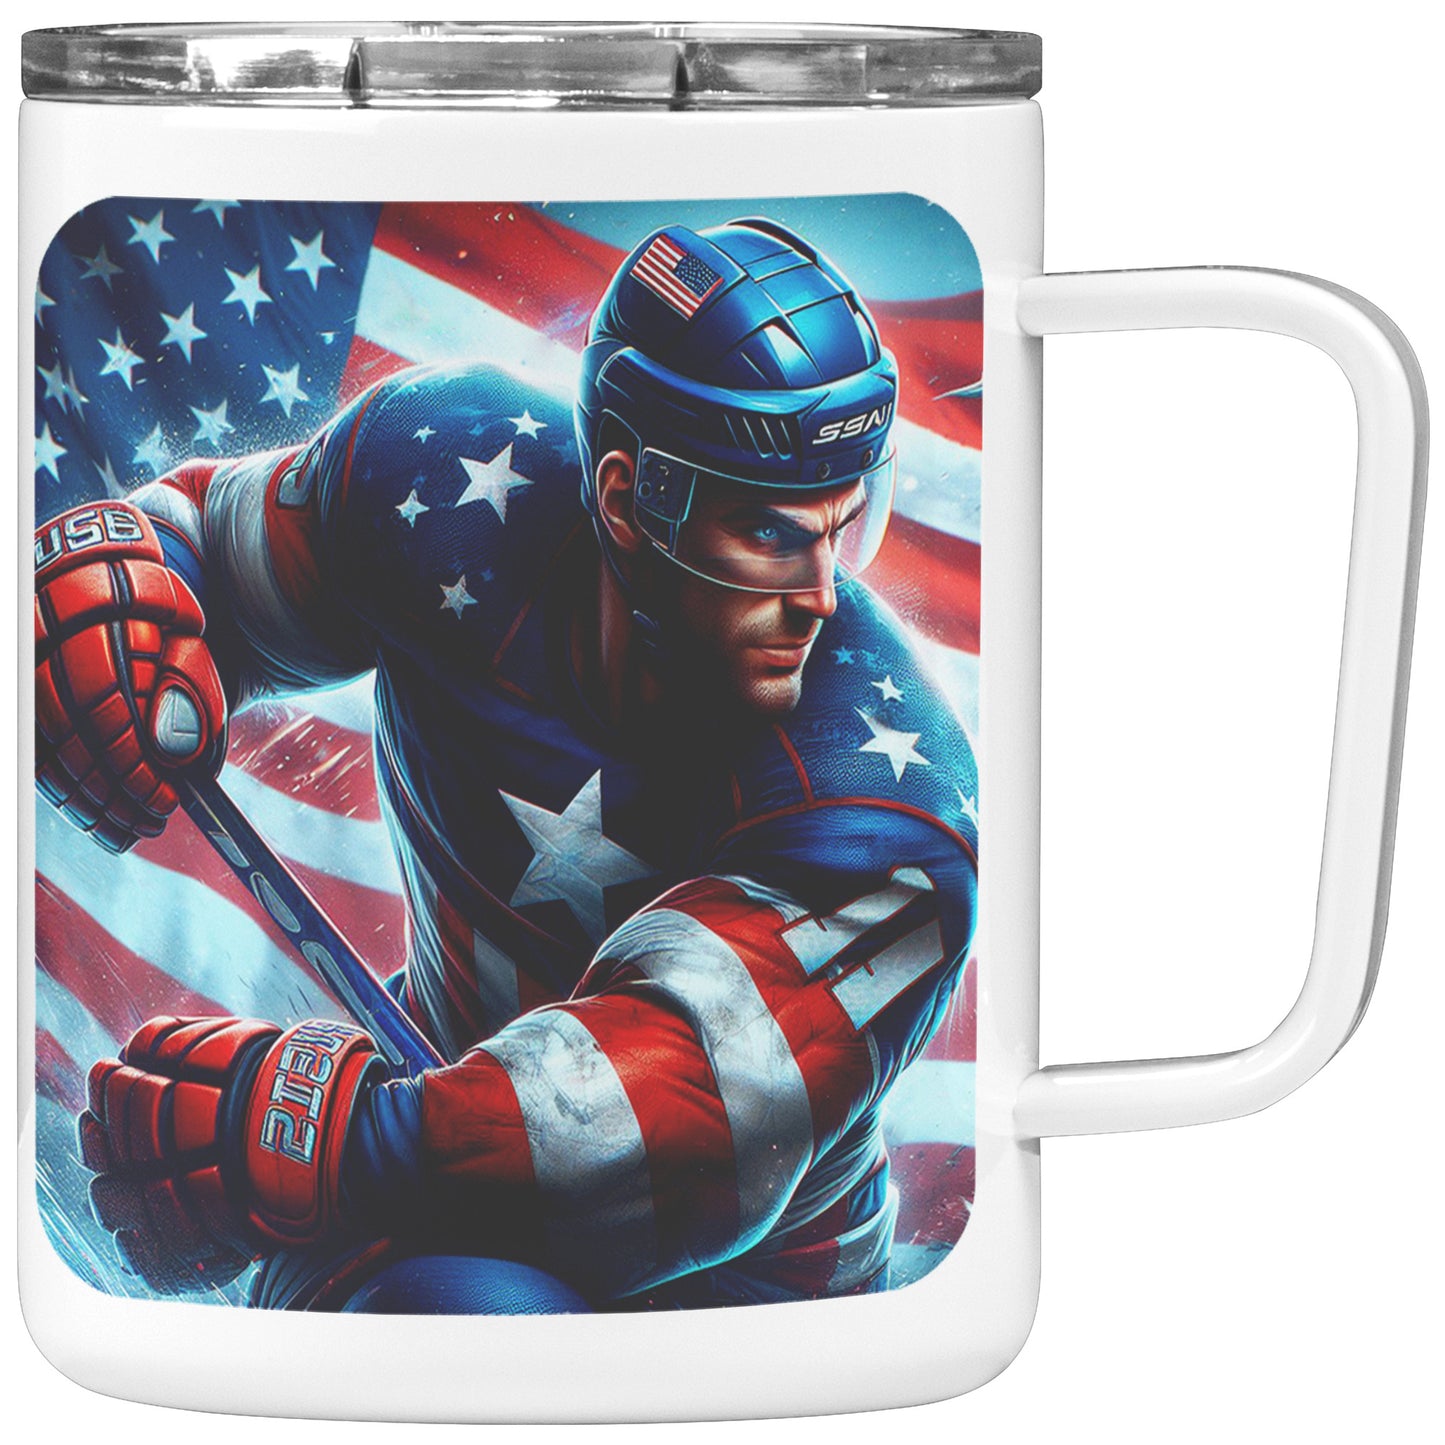 Man Ice Hockey Player - Coffee Mug #23